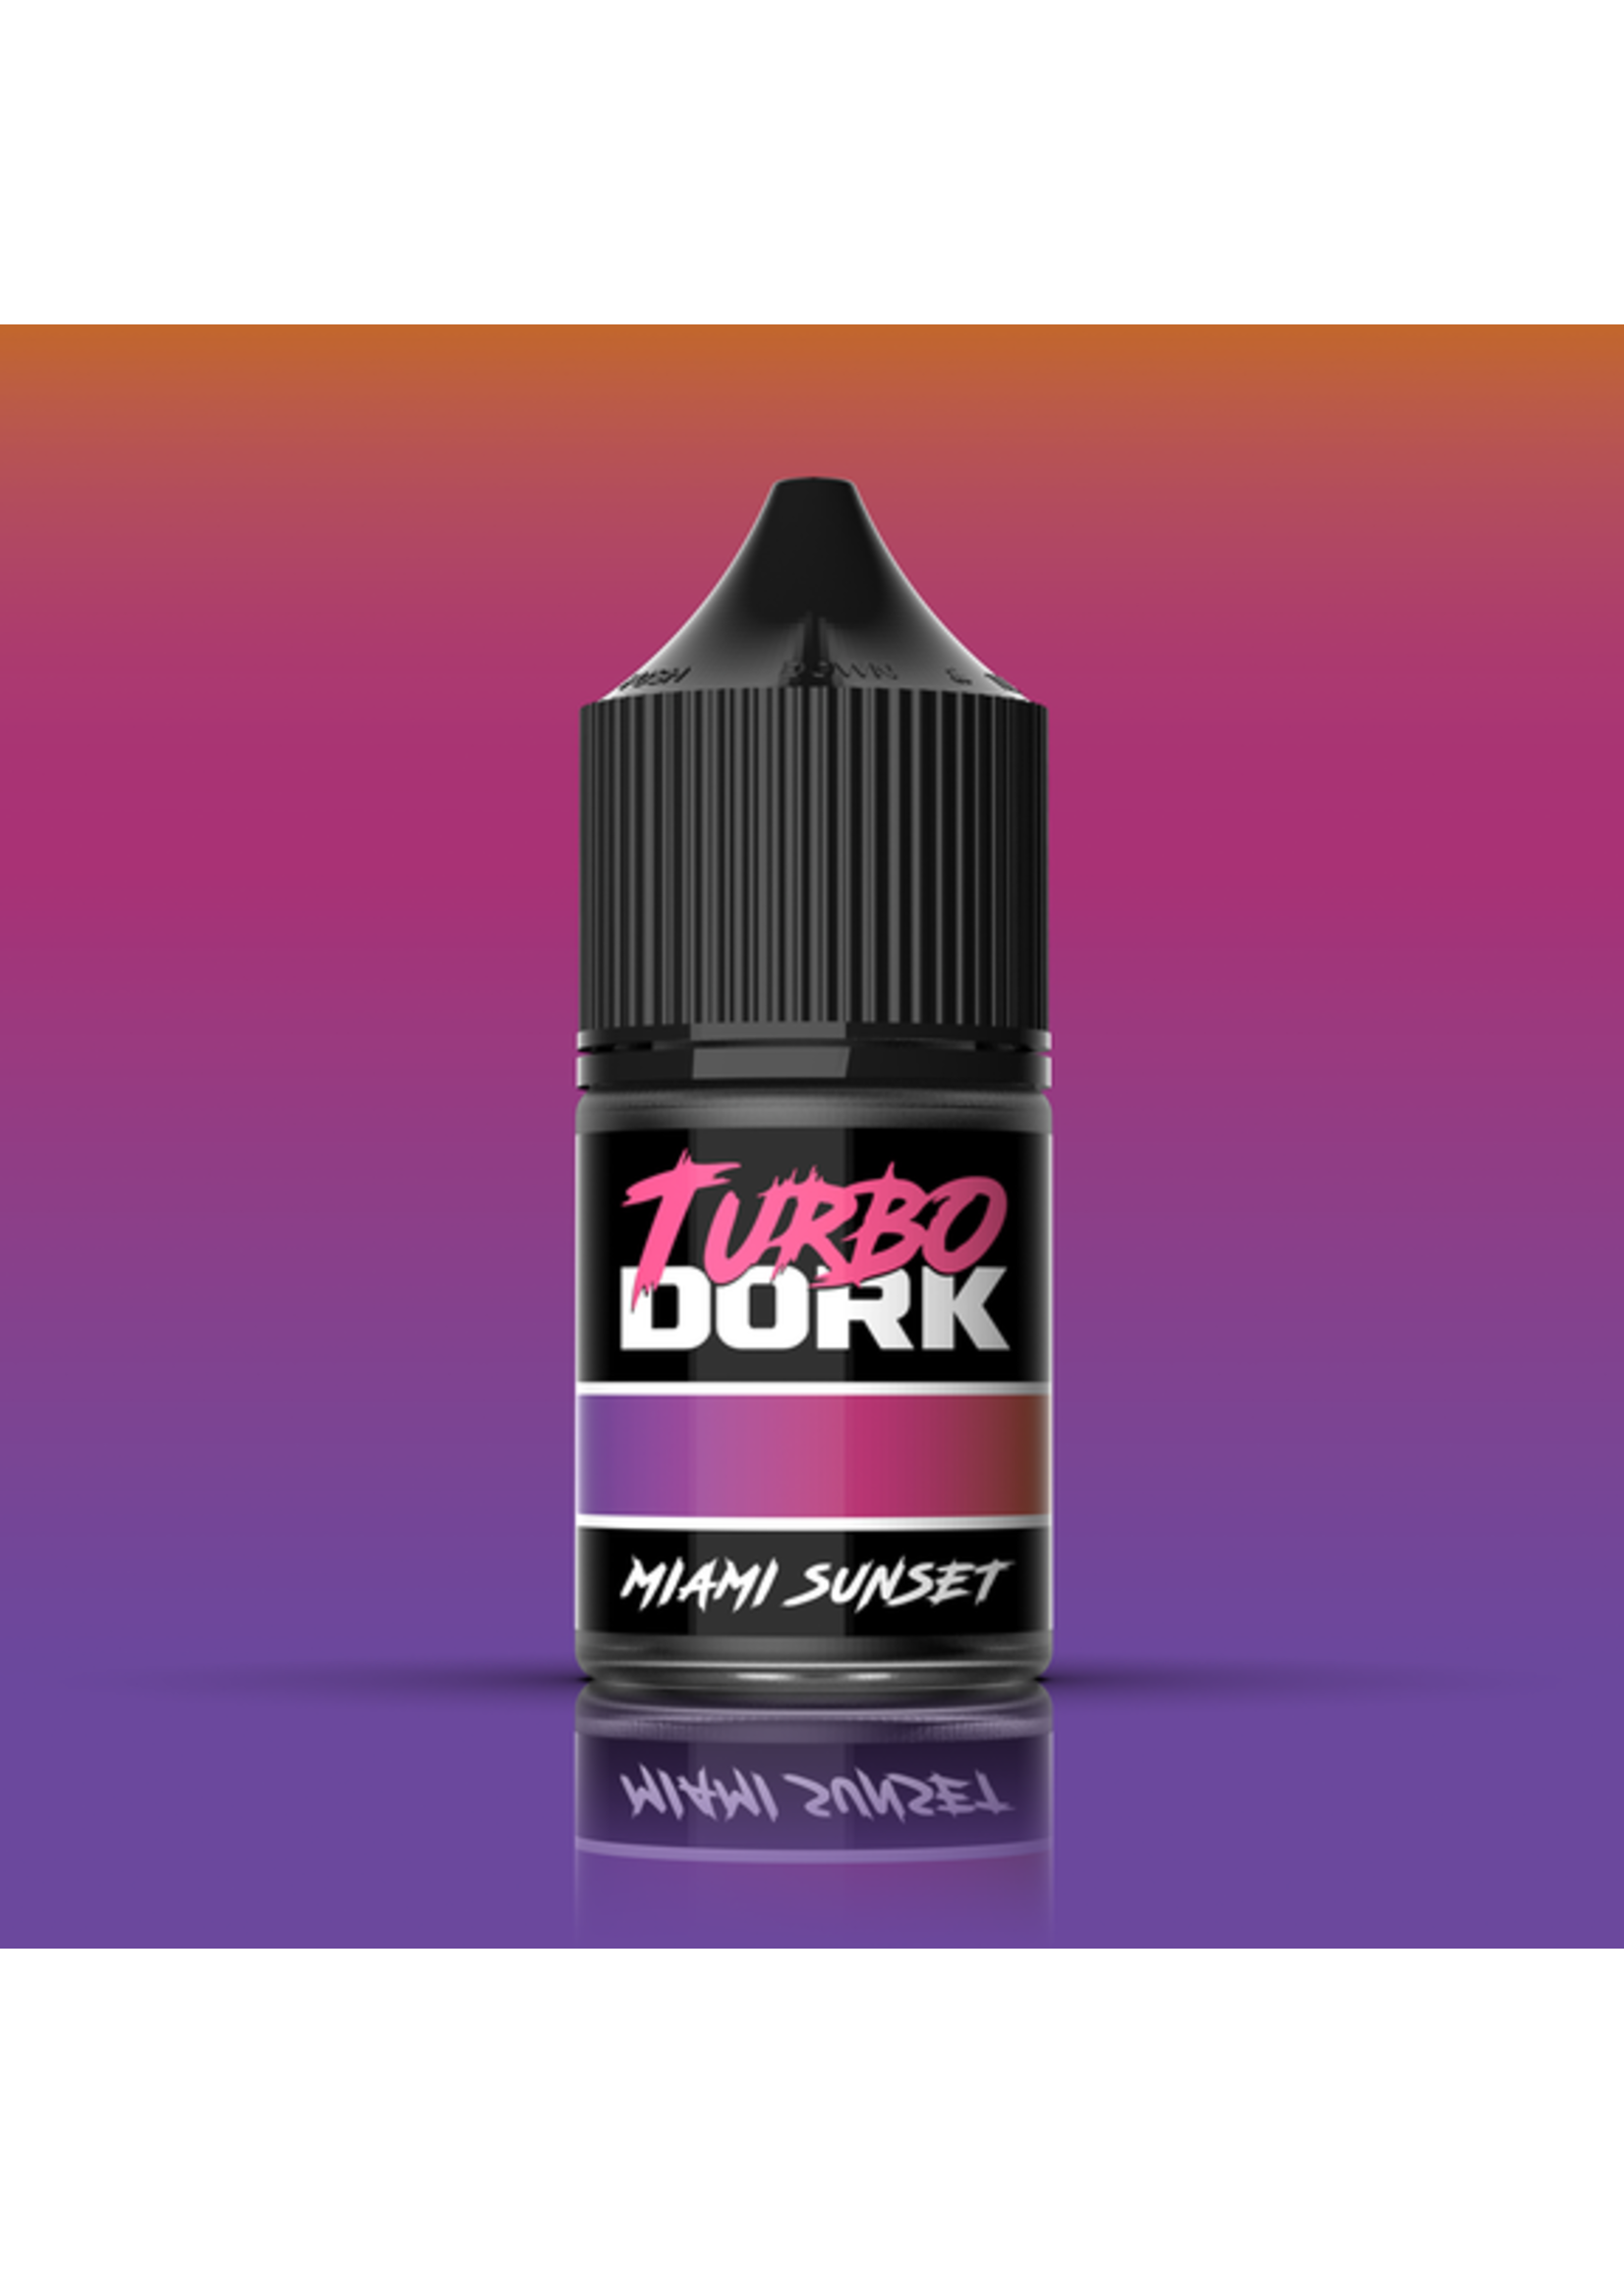 Turbo Dork TDK5502 - Miami Sunset Turboshift Paint (22ml)